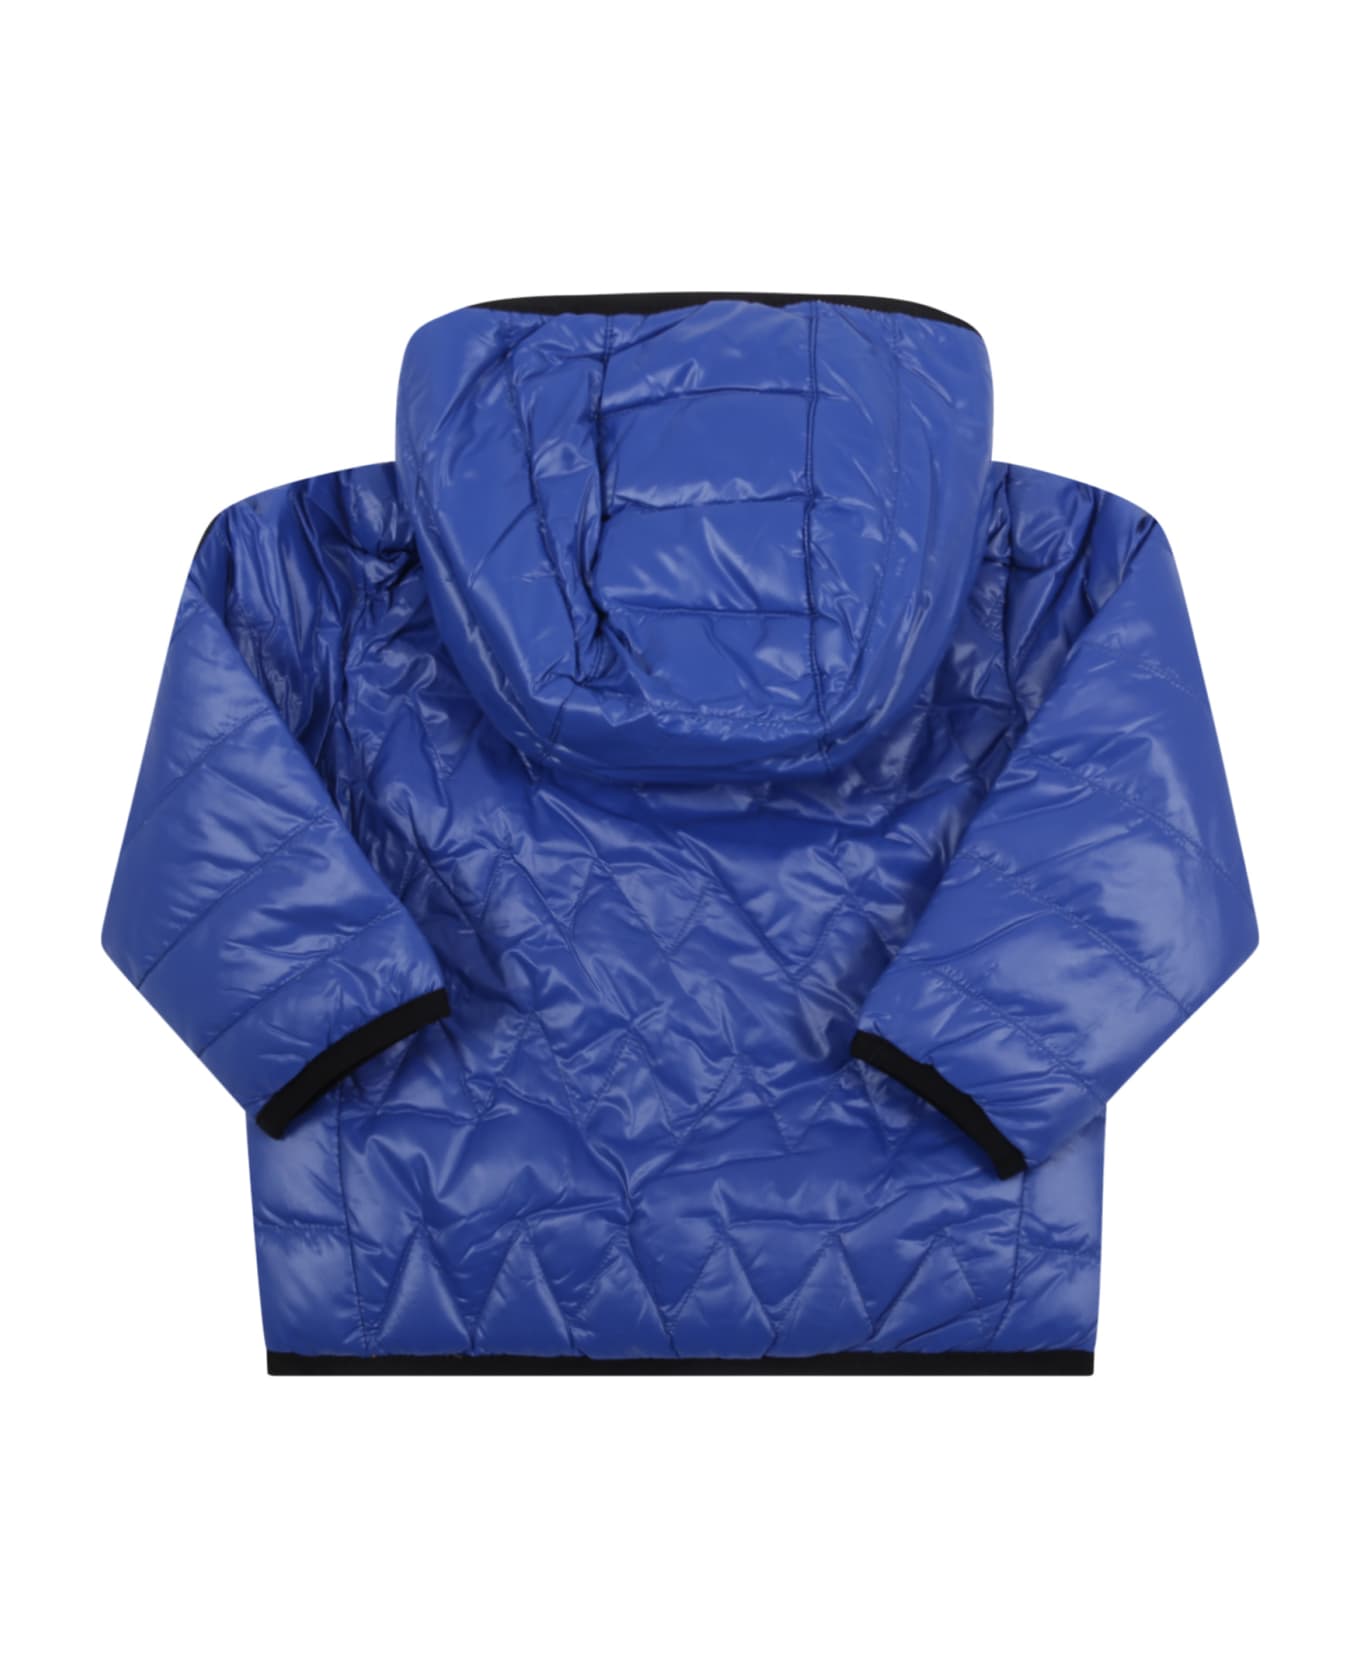 Hugo Boss Reversible Jacket For Baby Boy - Blue